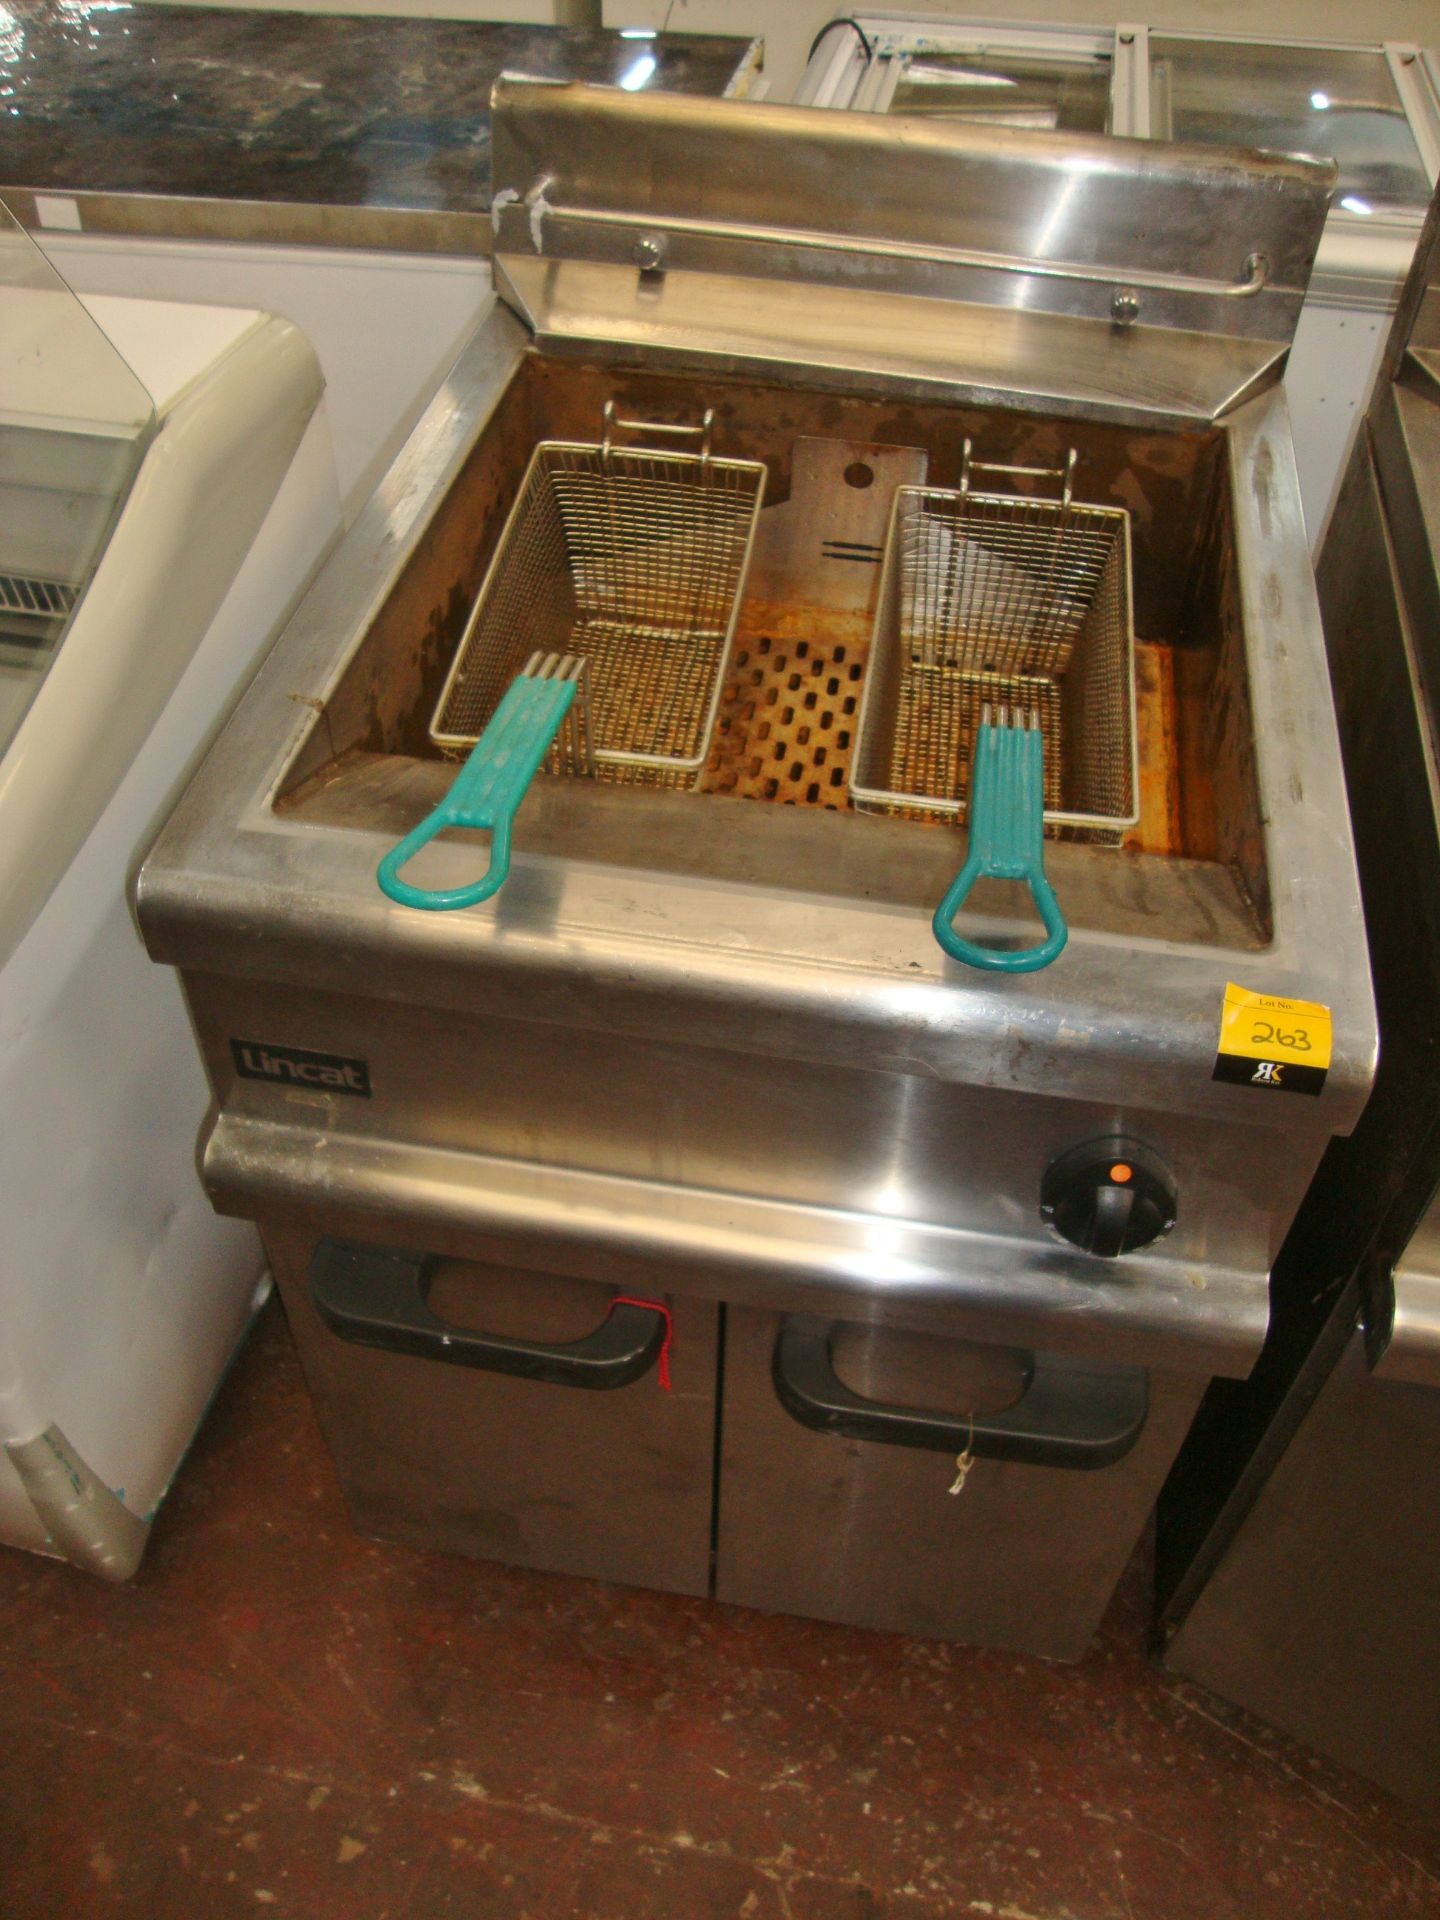 Lincat stainless steel floor standing twin deep fat fryer model OG7 107/NIMPORTANT: Please - Image 2 of 3